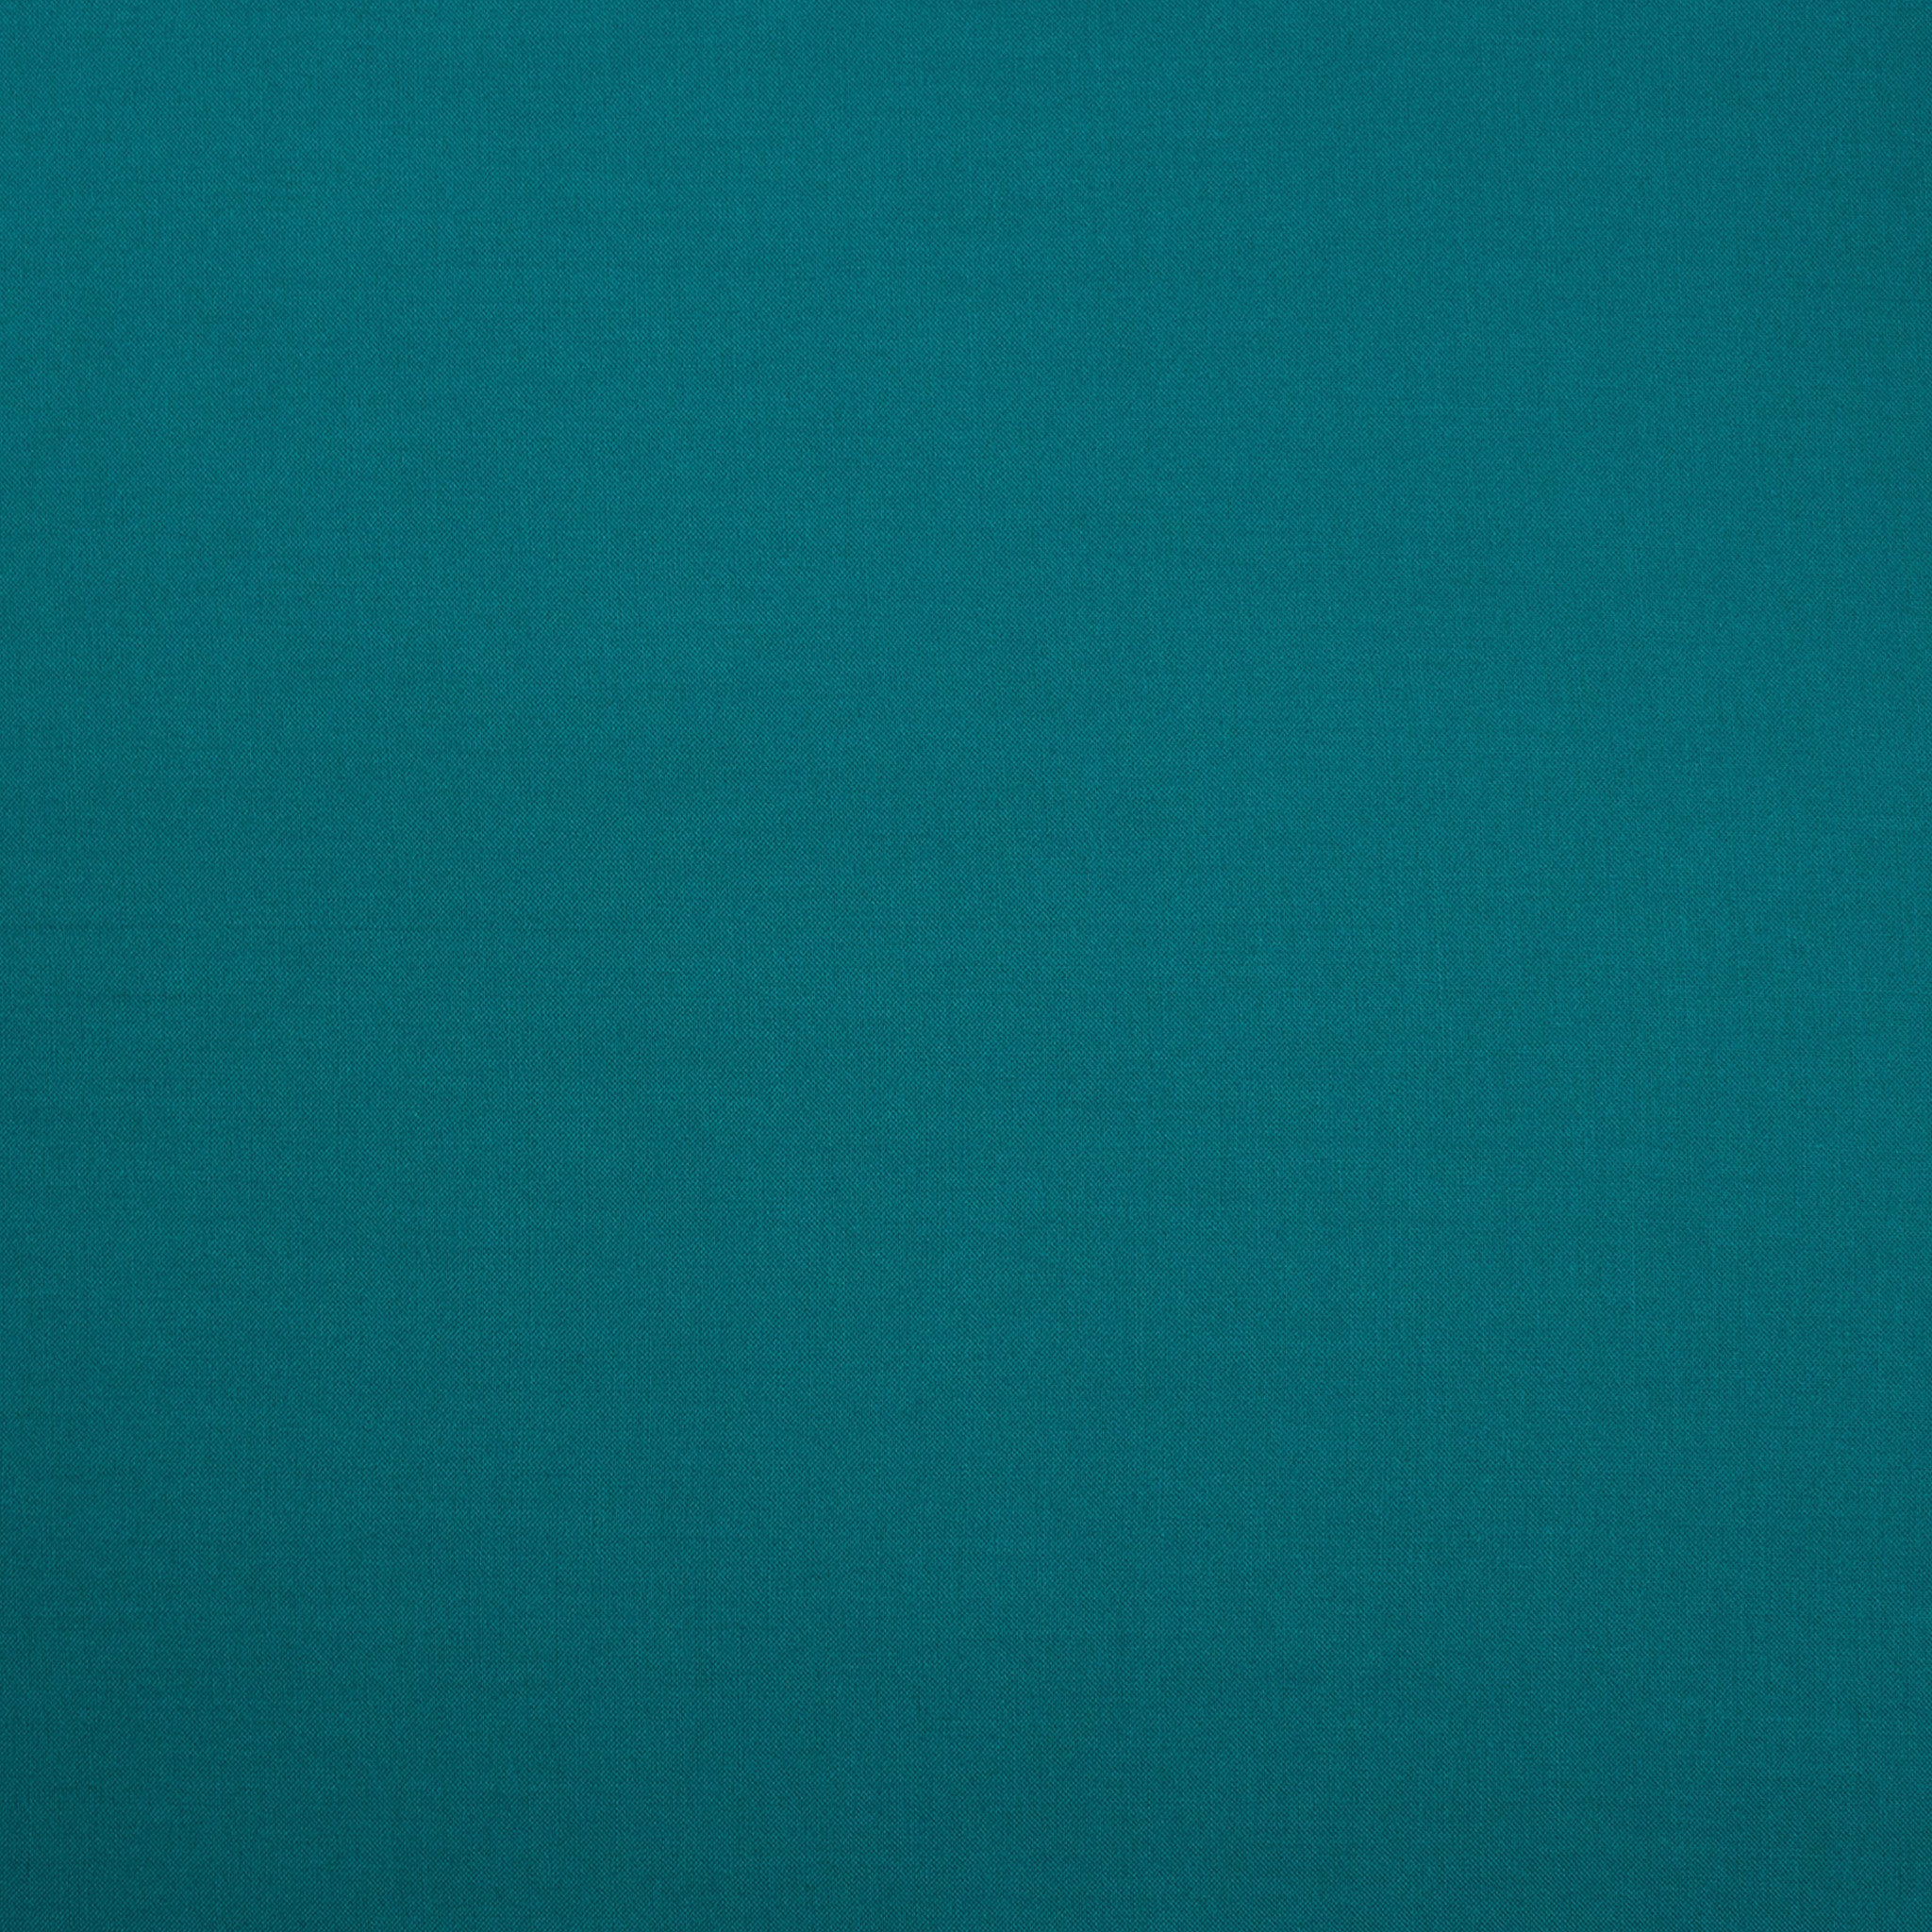 Turquoise 100% Viscose Fabric